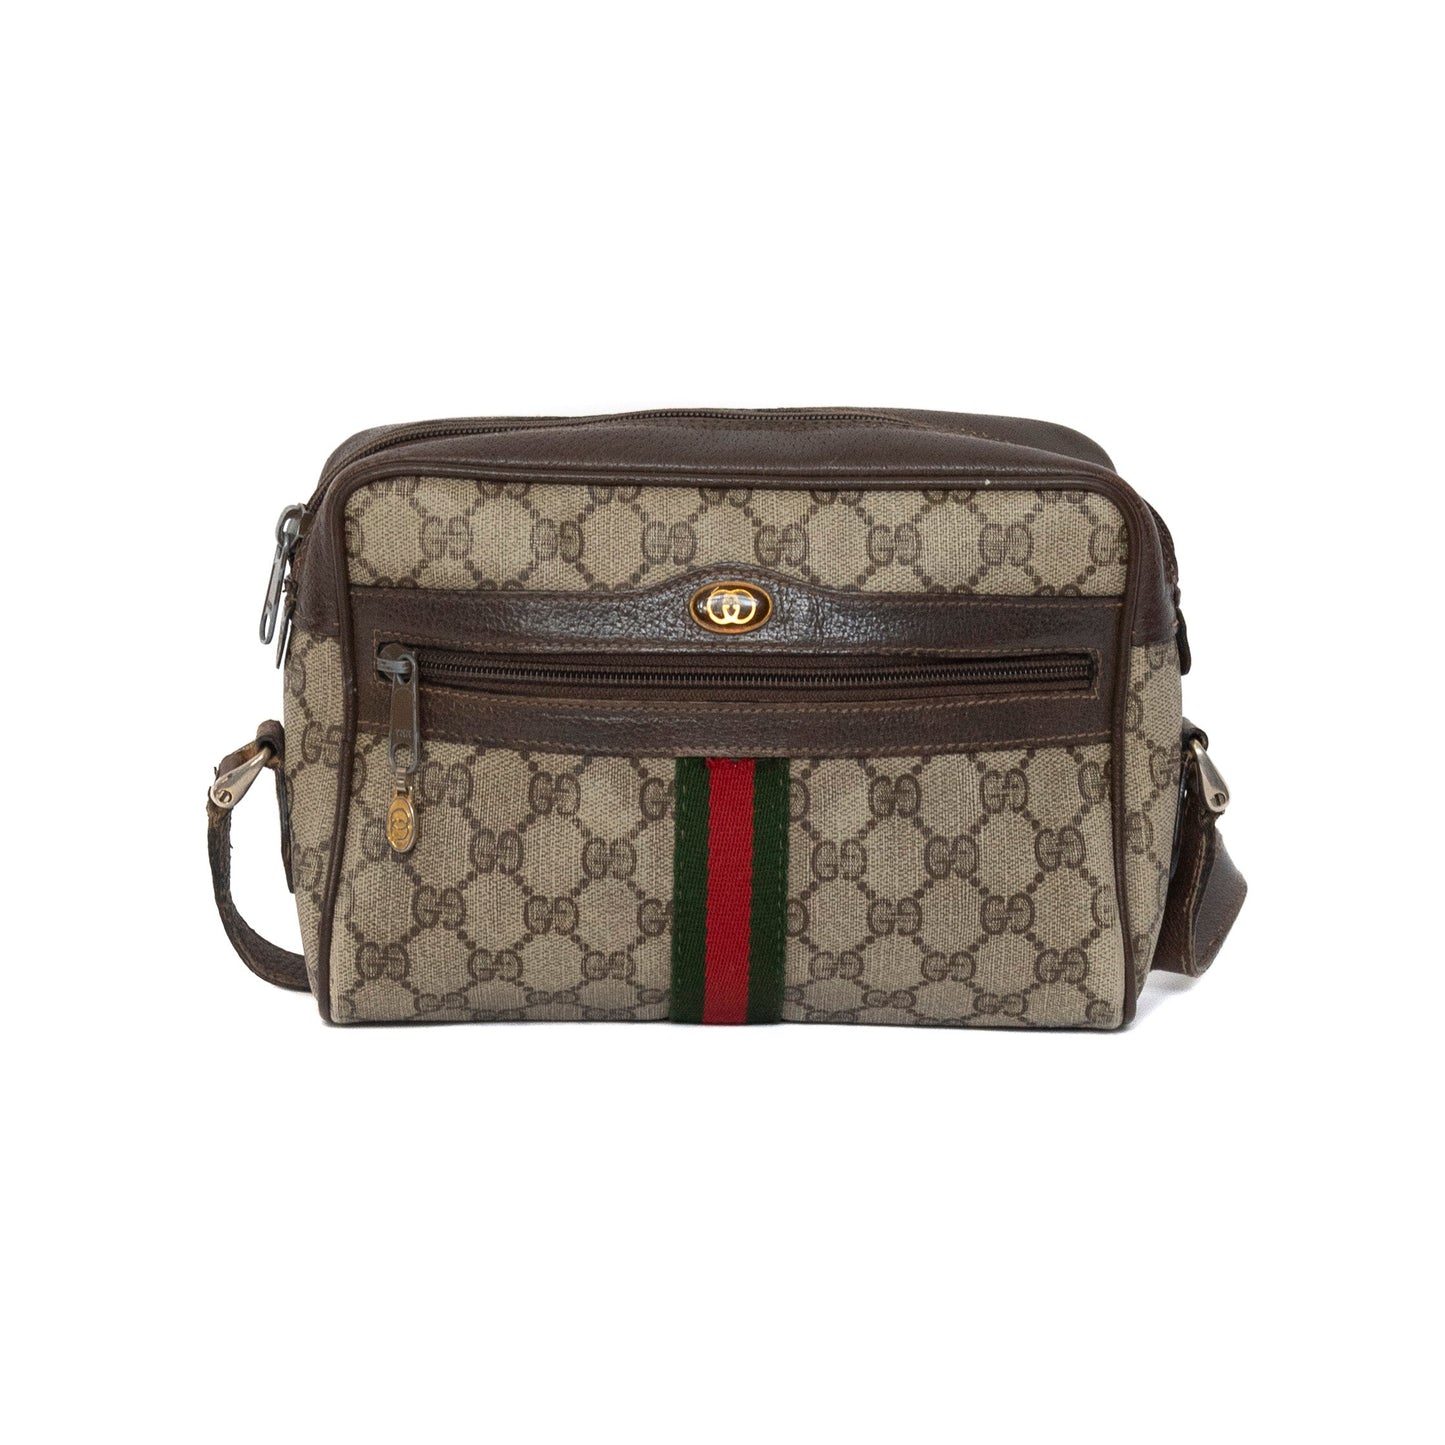 Gucci Crossbody Monogram Bag with Classic Gucci Trim